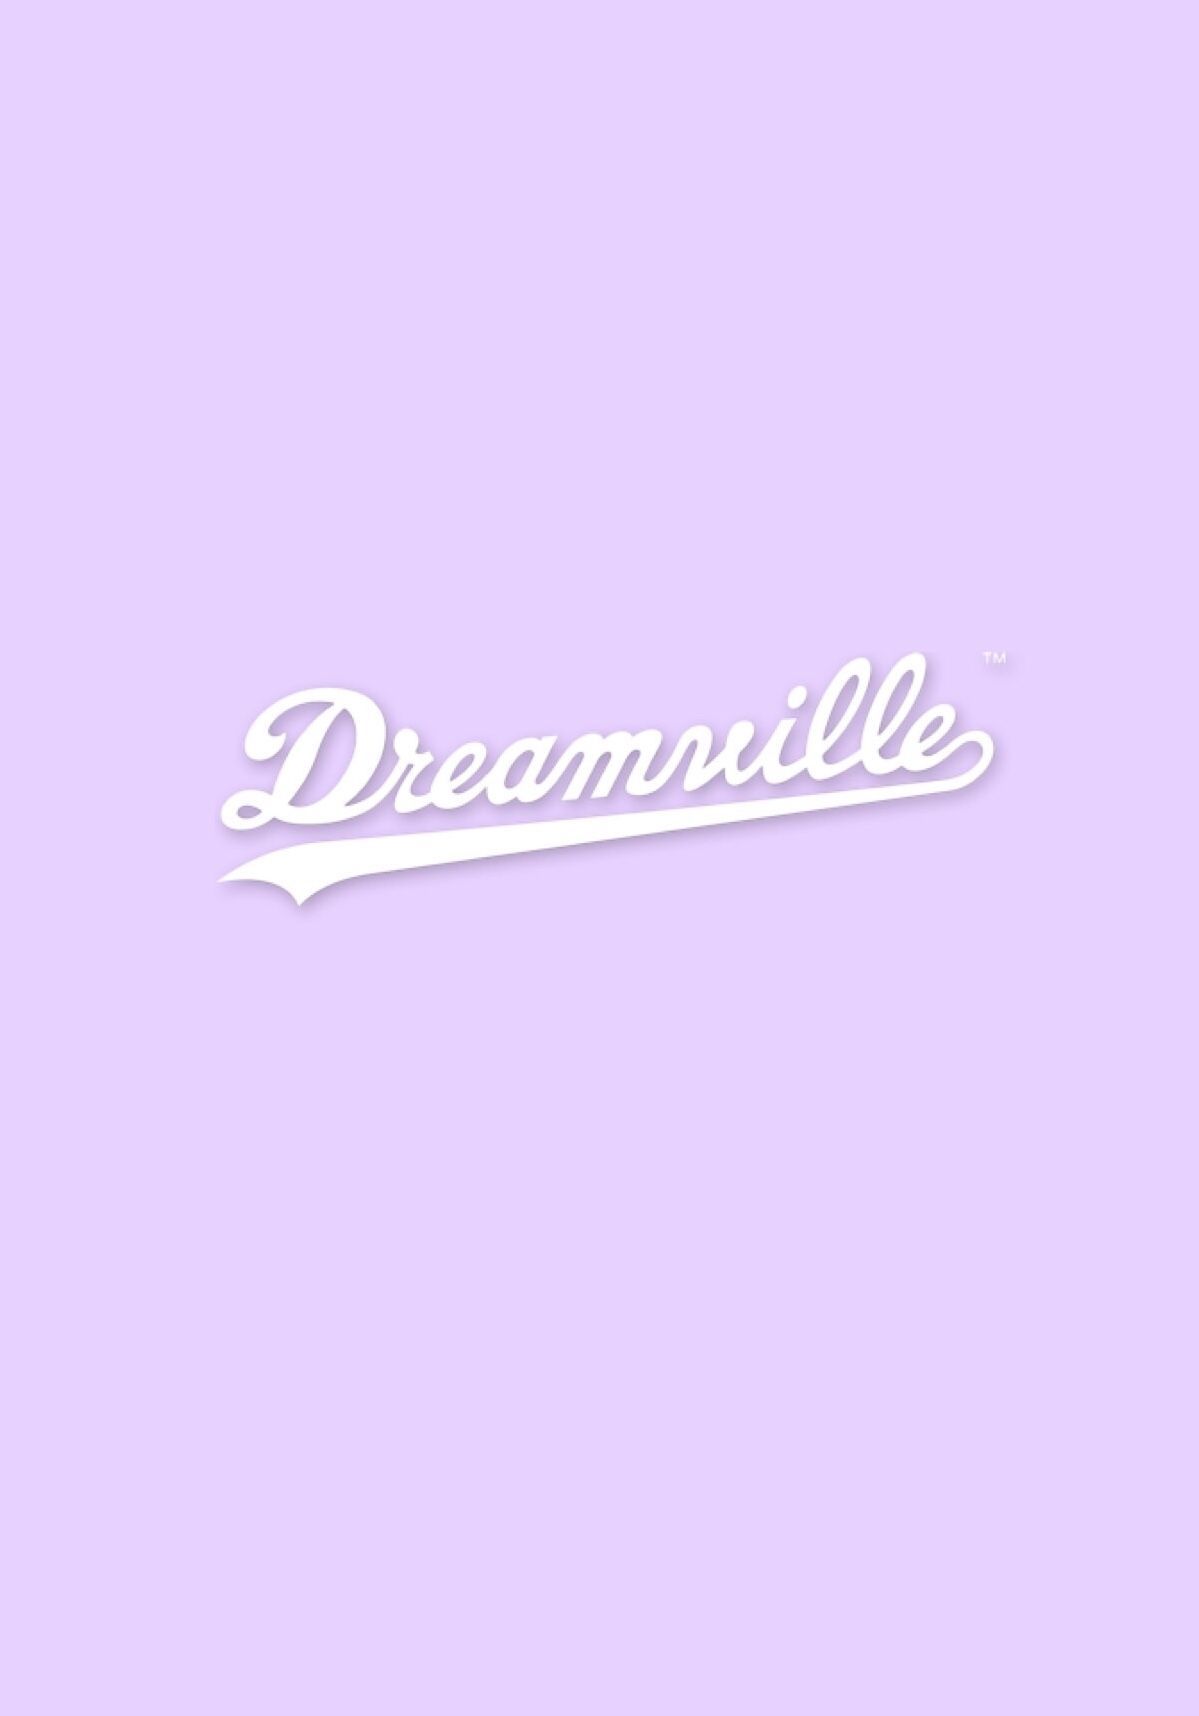 Dreamville Wallpaper For Mobile Phone Tablet Desktop Puter